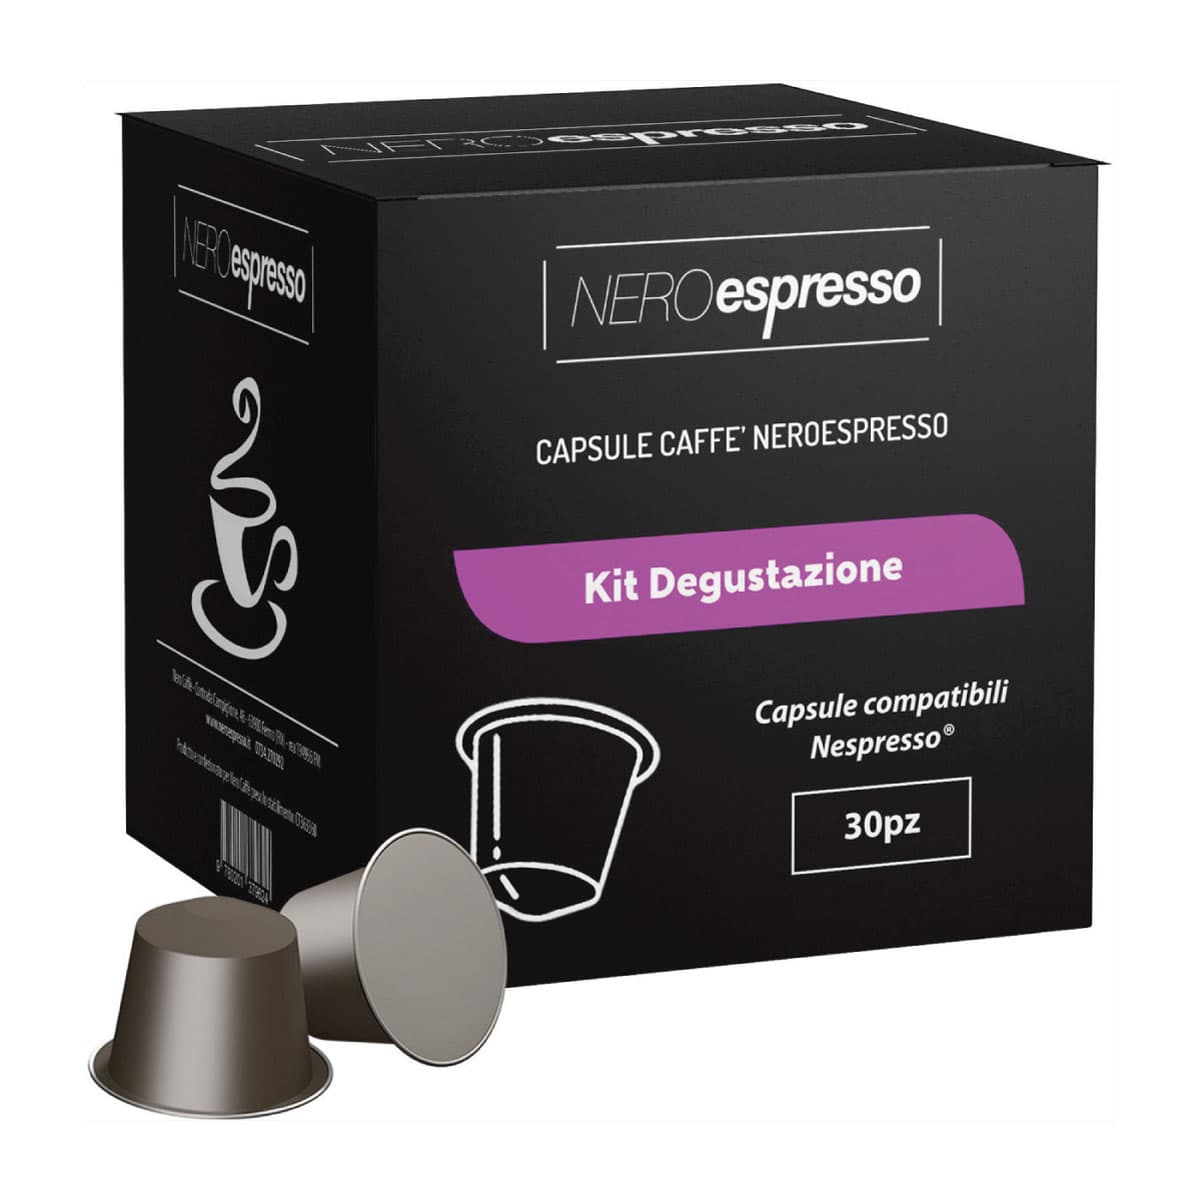 https://www.neroespresso.it/wp-content/uploads/2022/03/capsule-nespresso-kit-degustazione.jpg